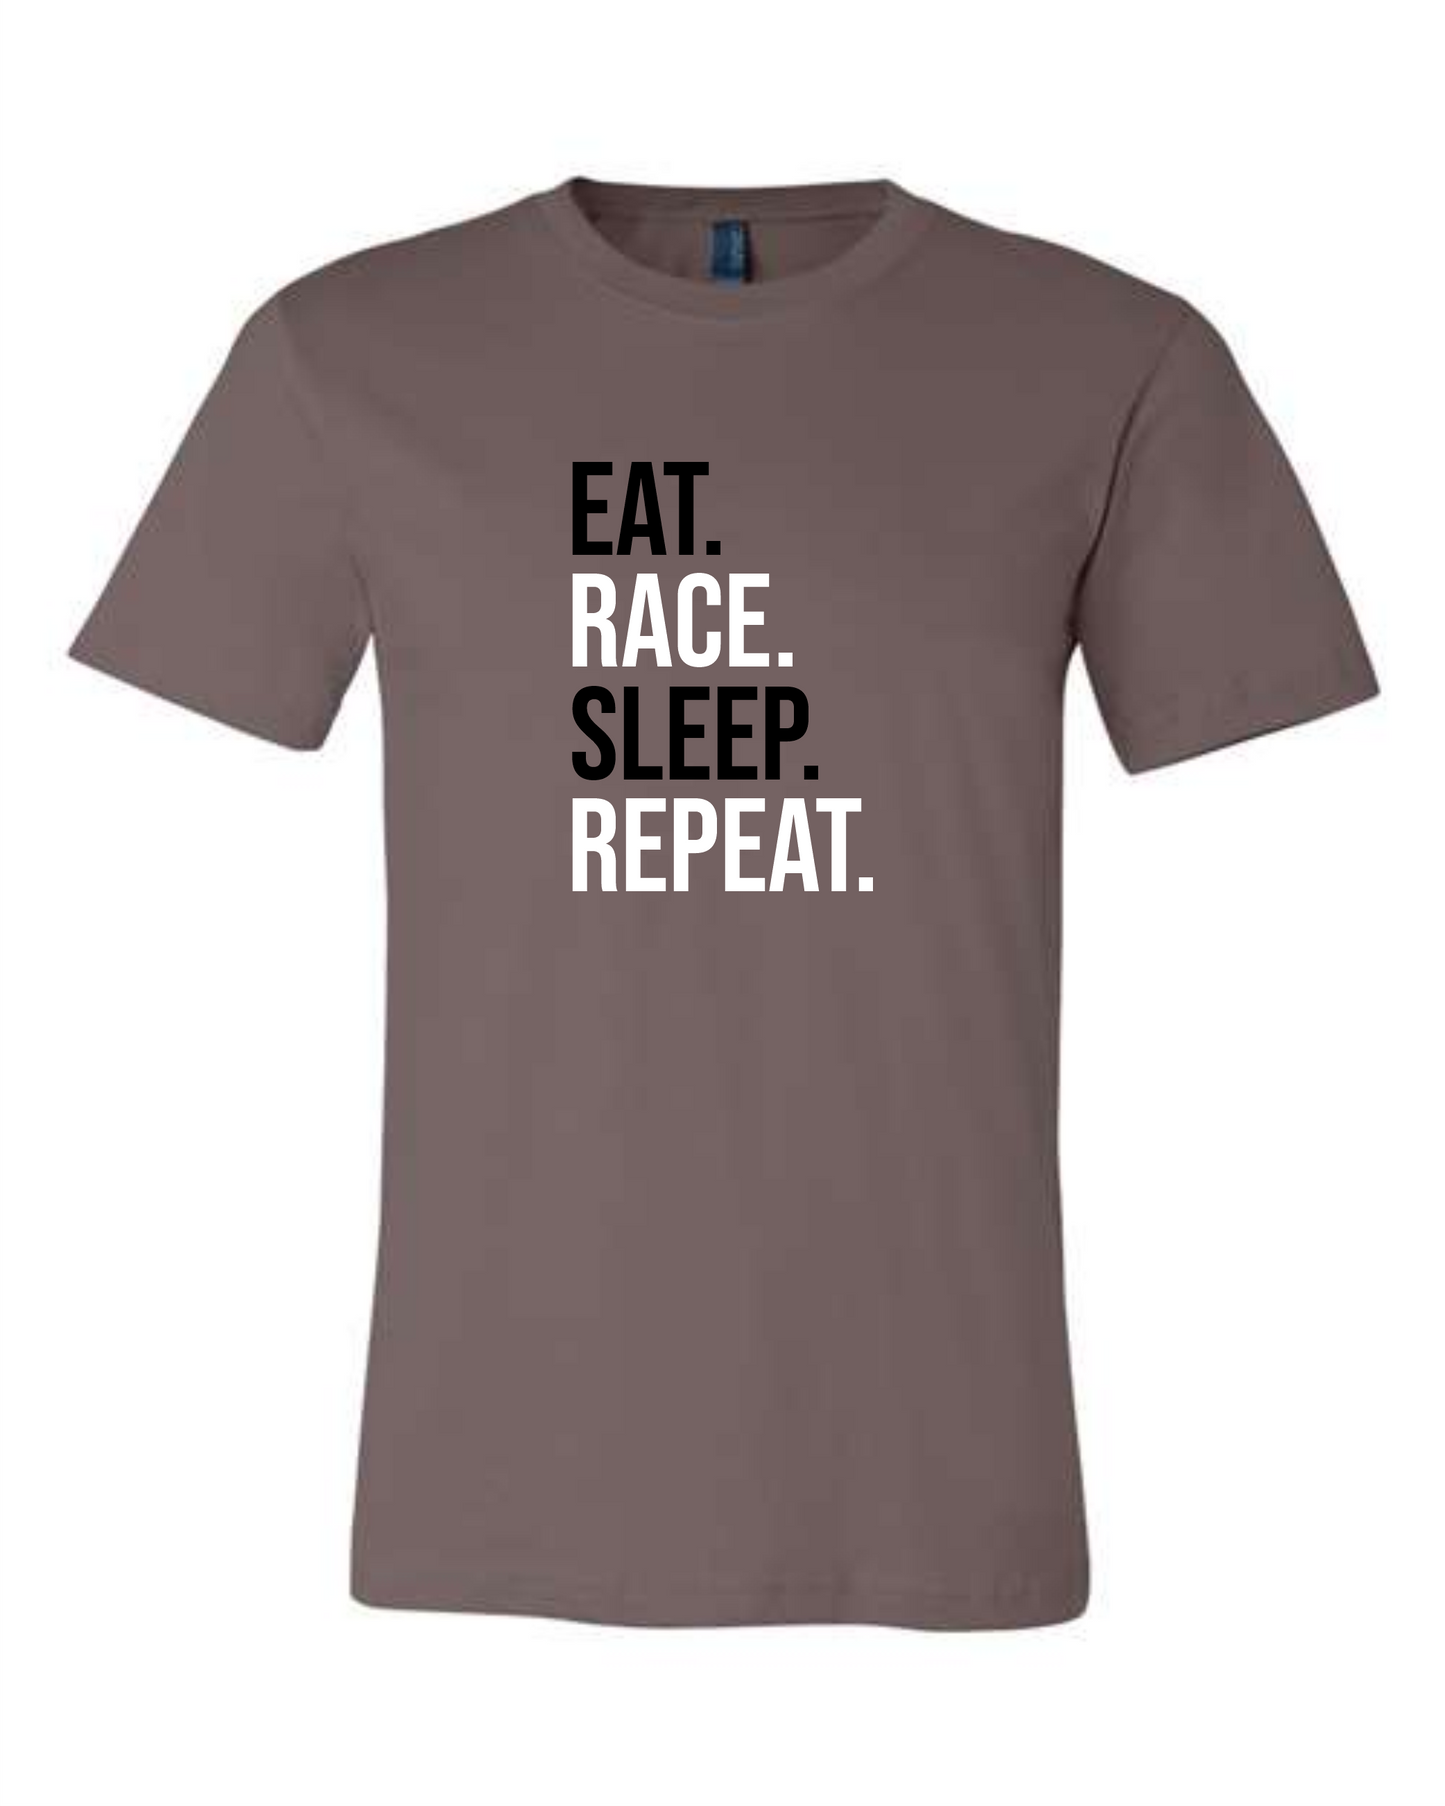 EAT. RACE. SLEEP. REPEAT.